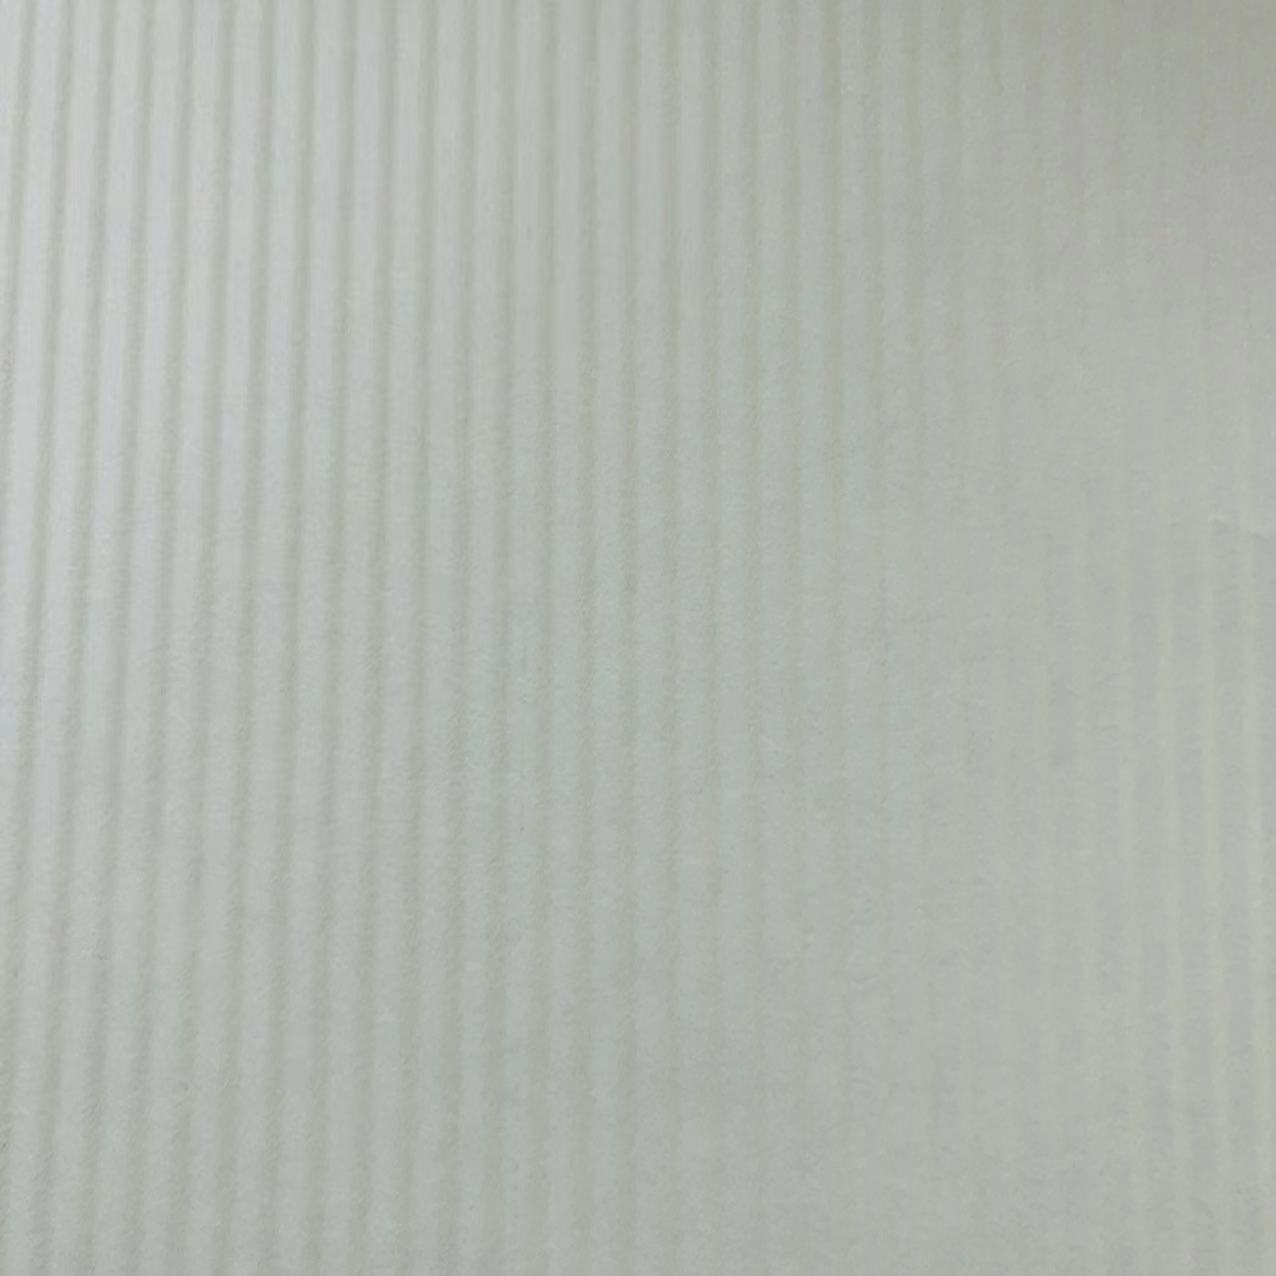 Lt Automotive Filter Paper Roll